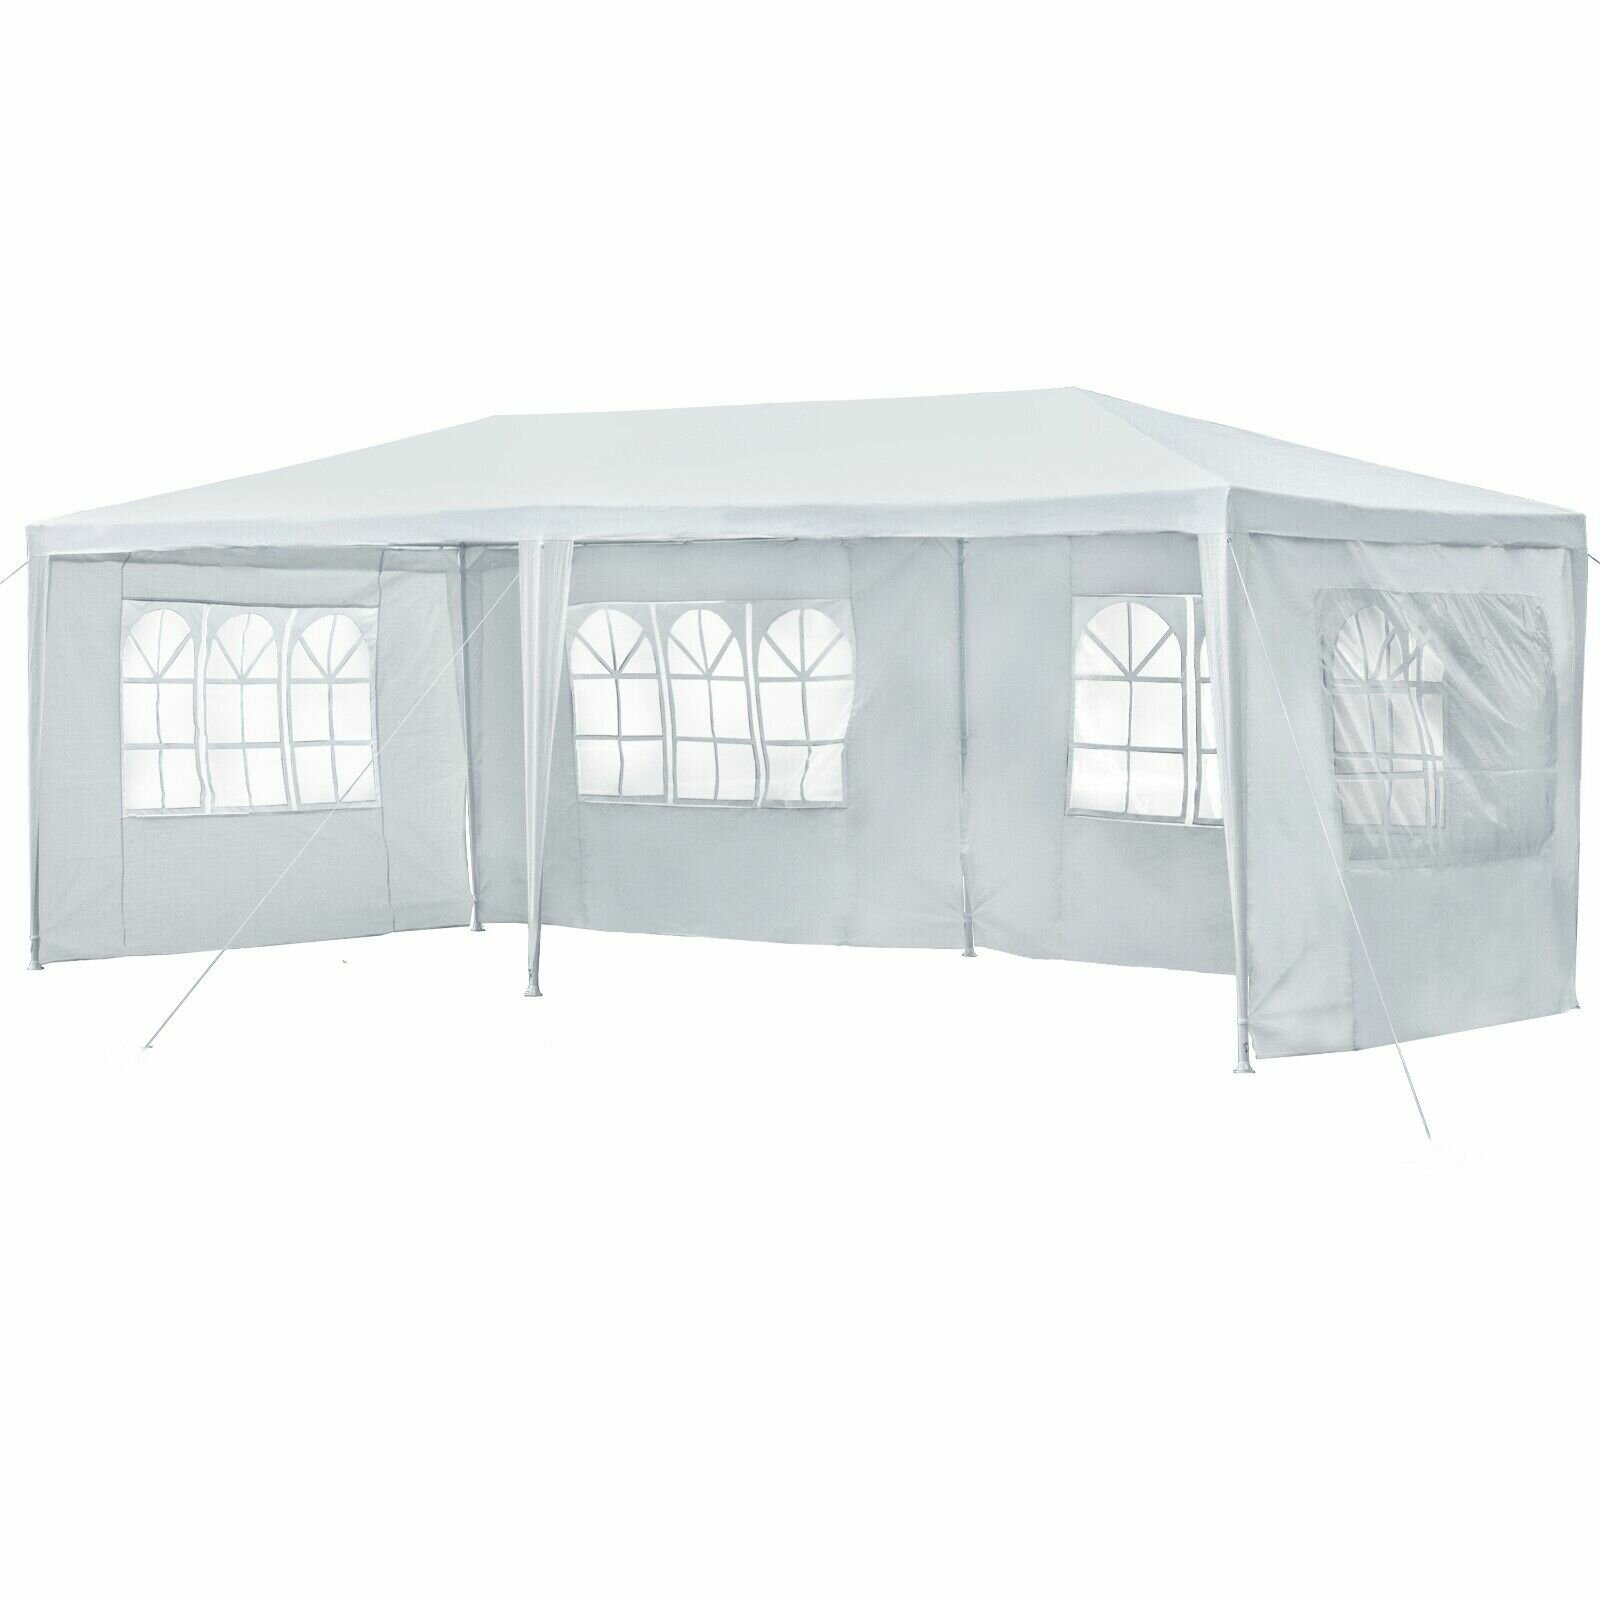 Ściana boczna z baldachimem 10x20ft 210D Wodoodporna altana Shelter Shade z oknami Outdoor Easy Party Tent bez góry